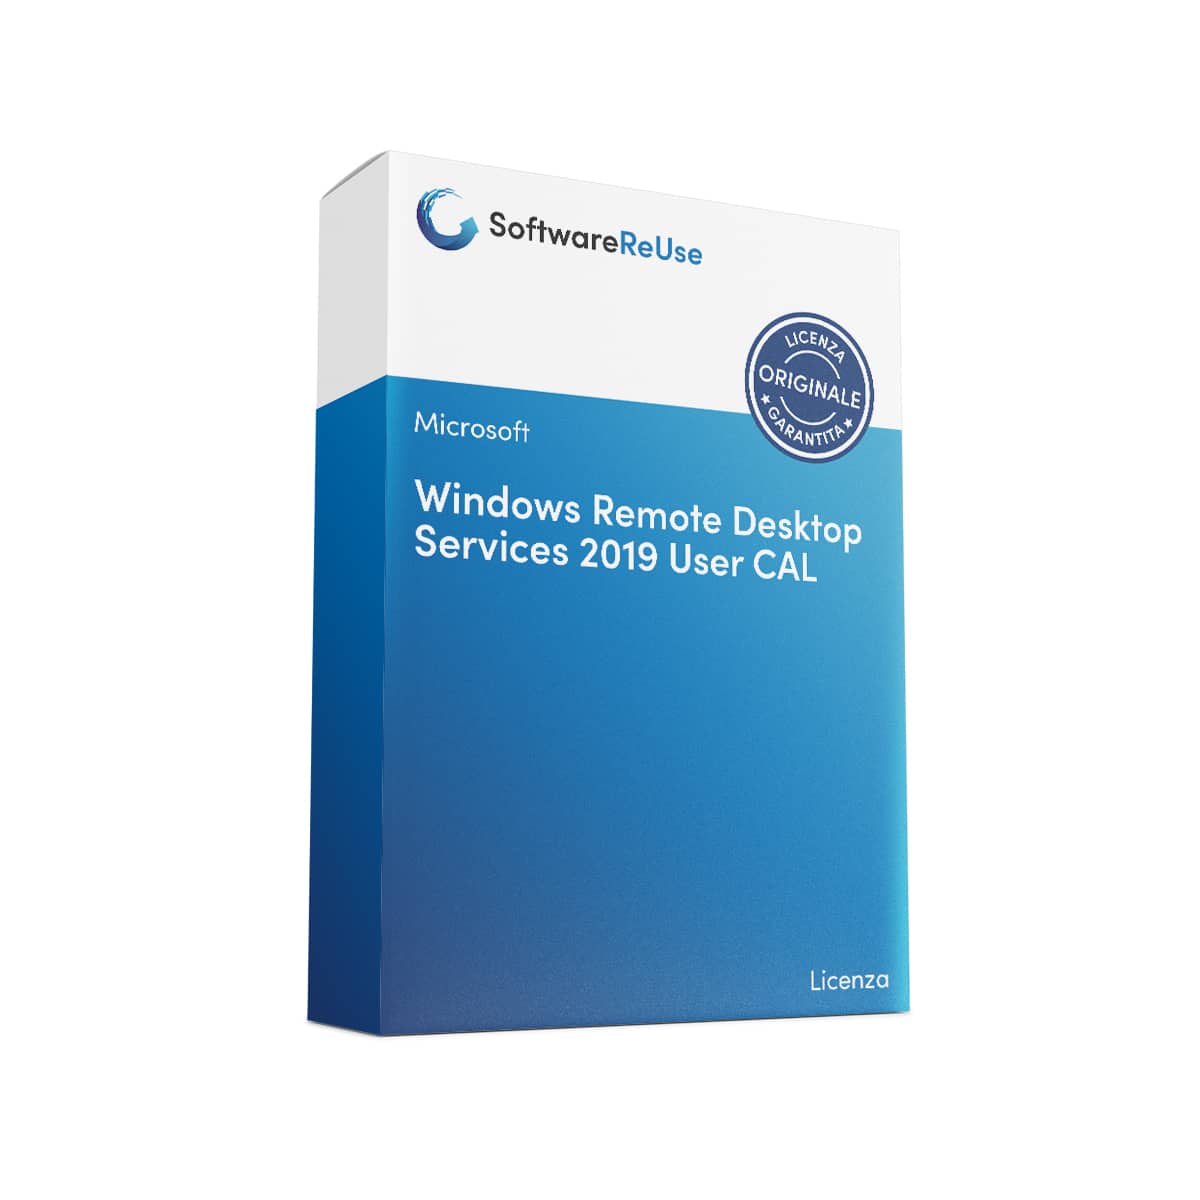 Windows Remote Desktop Services 2019 User CAL IT